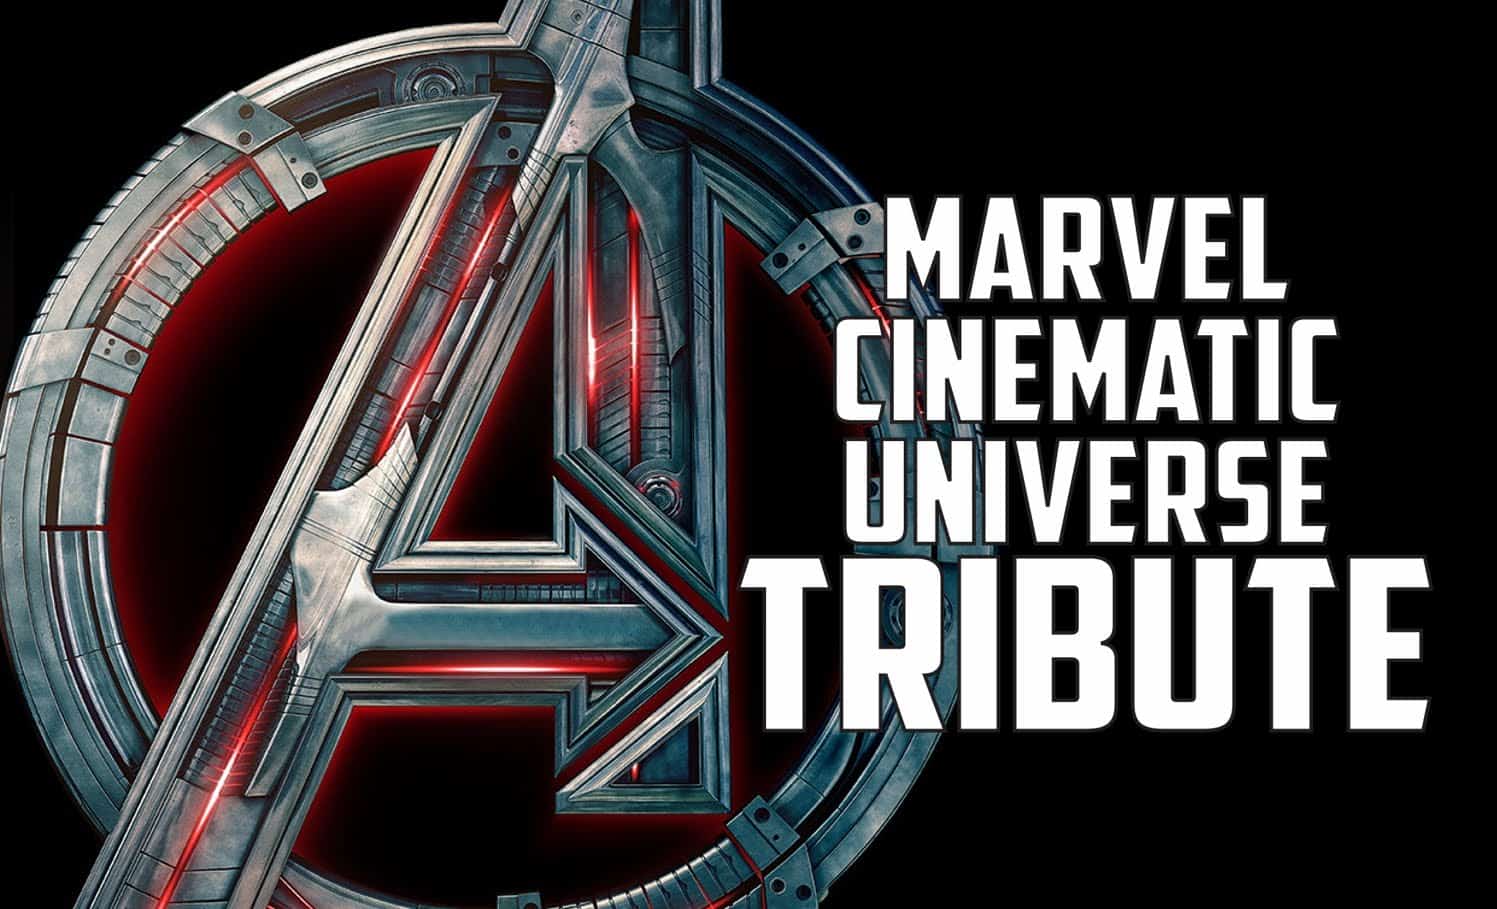 Marvel Cinematic Universe tributes